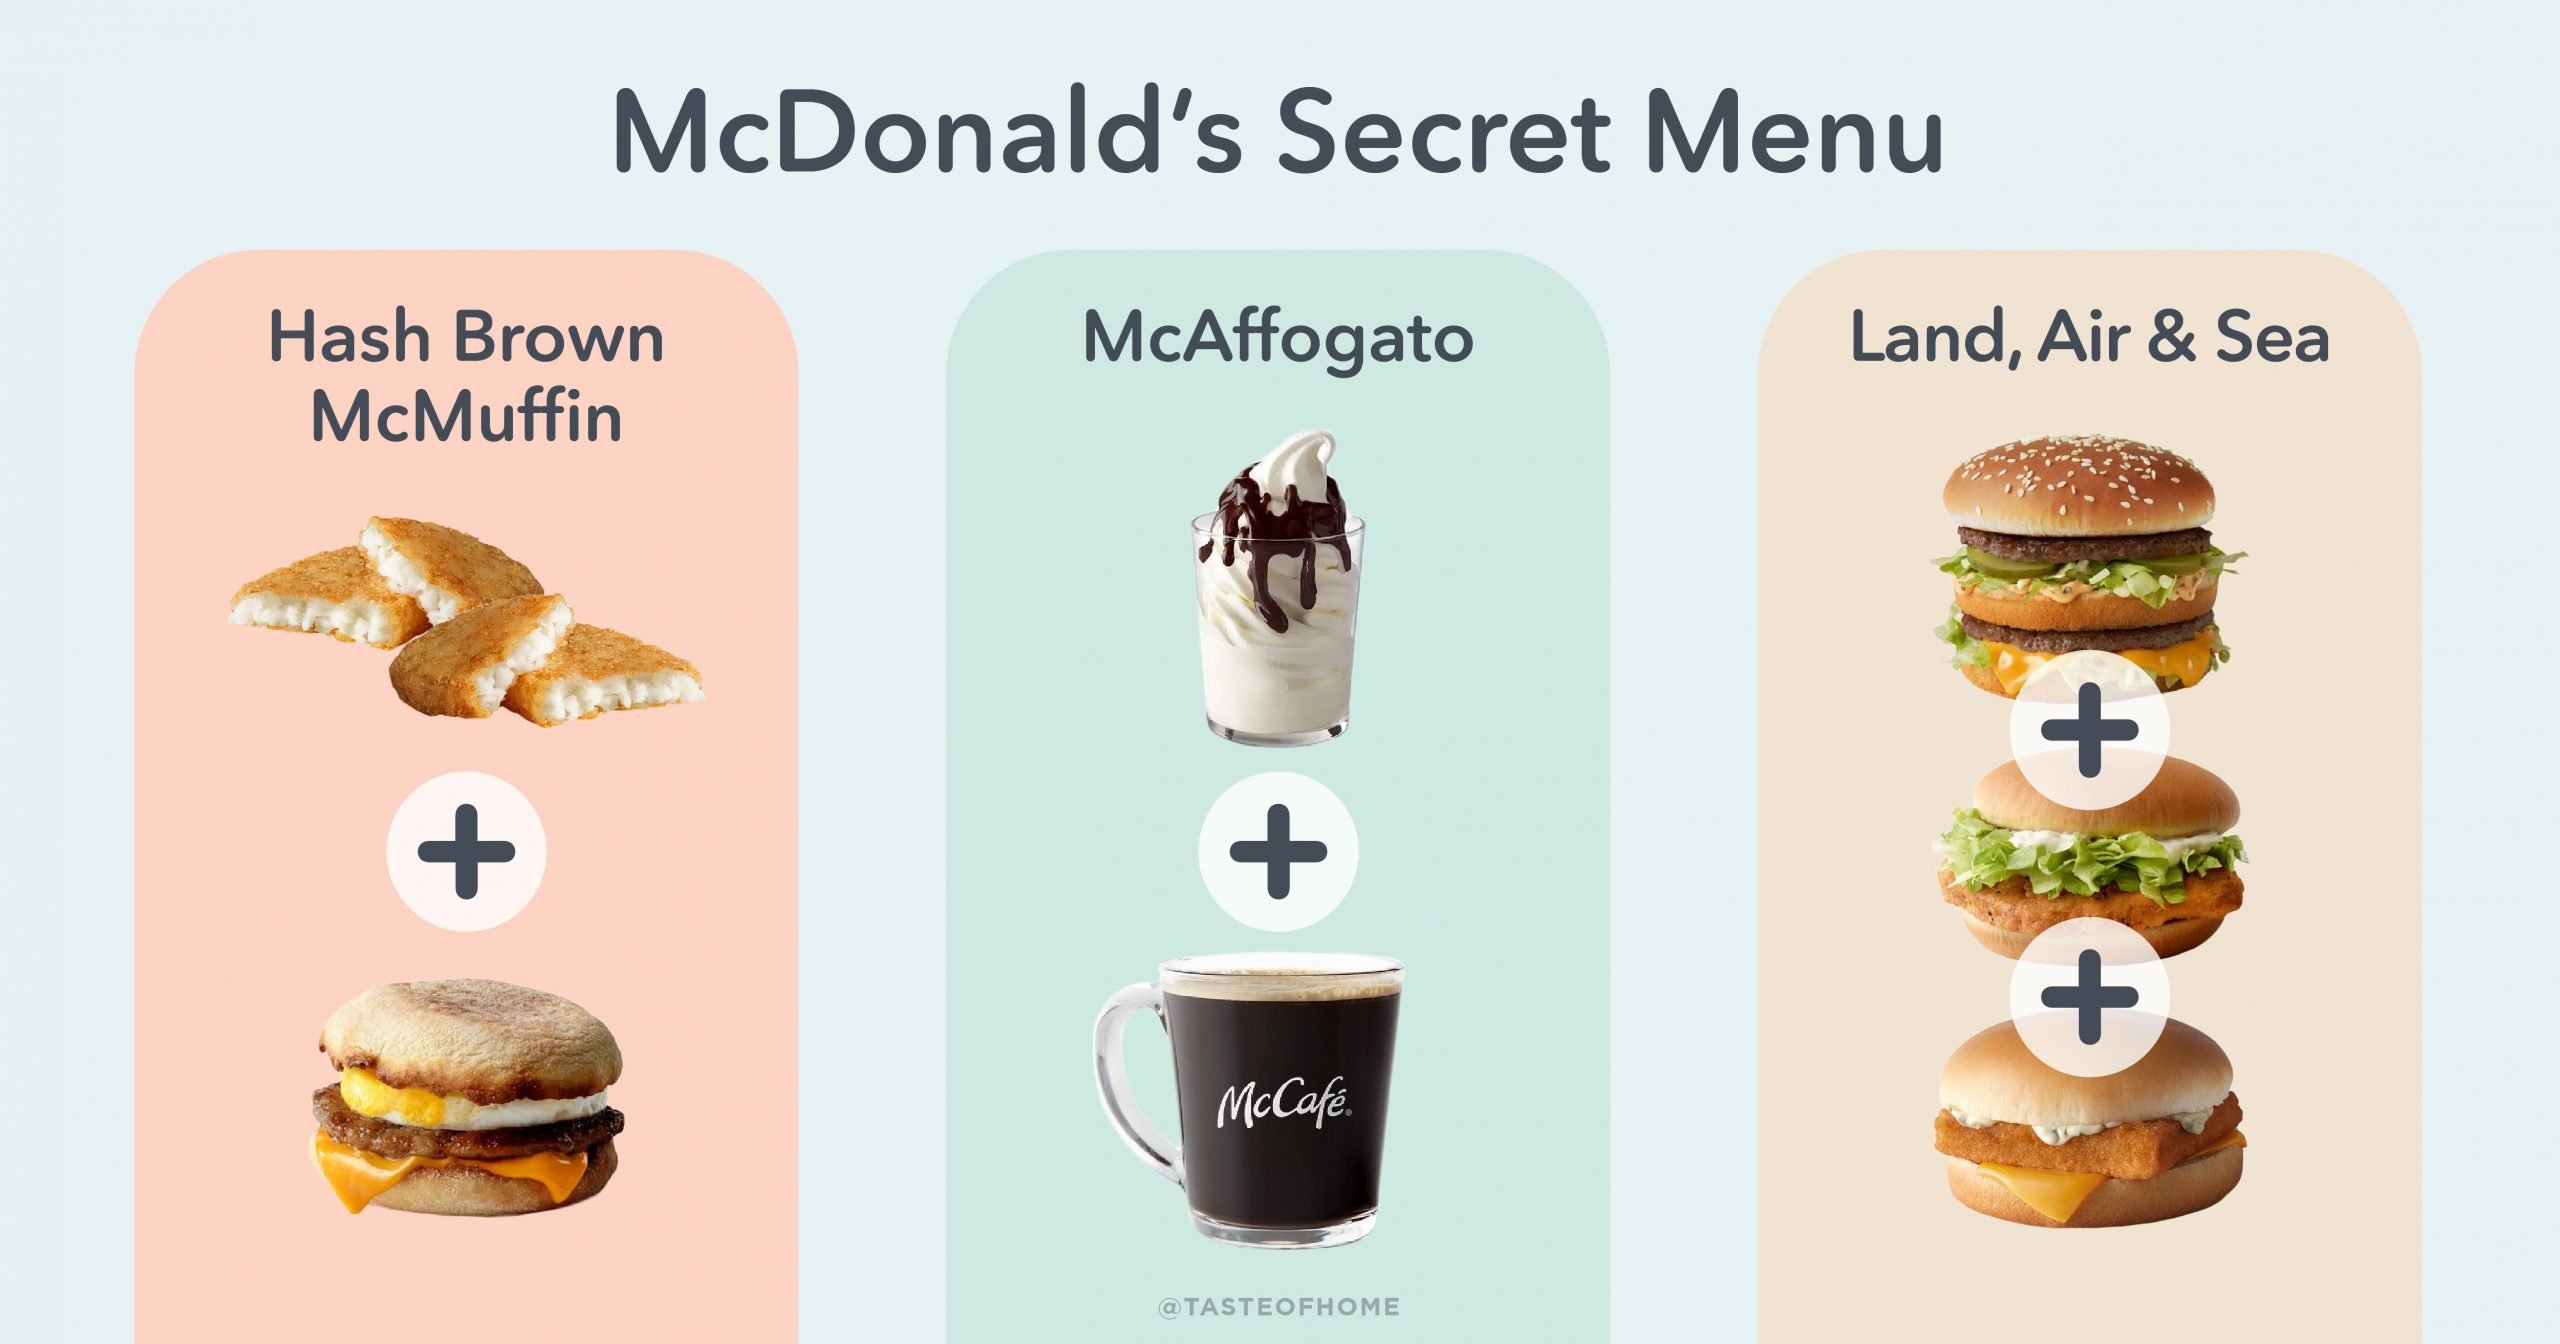 What's on the secret menu at McDonald's?